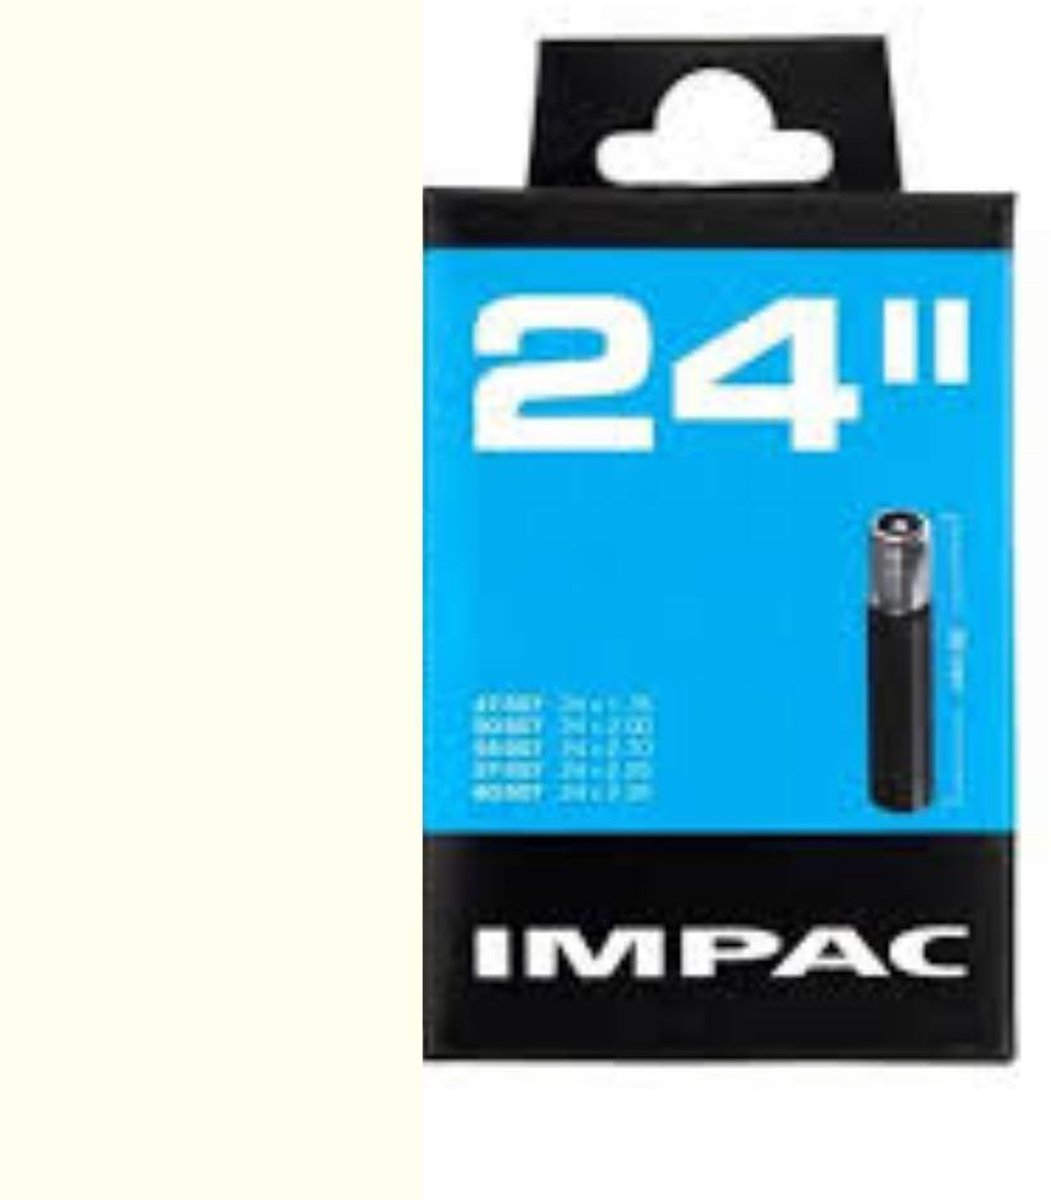 Impac Binnenband 24 X 1.75/2.35 (47/60-507) Av 35mm - Zwart